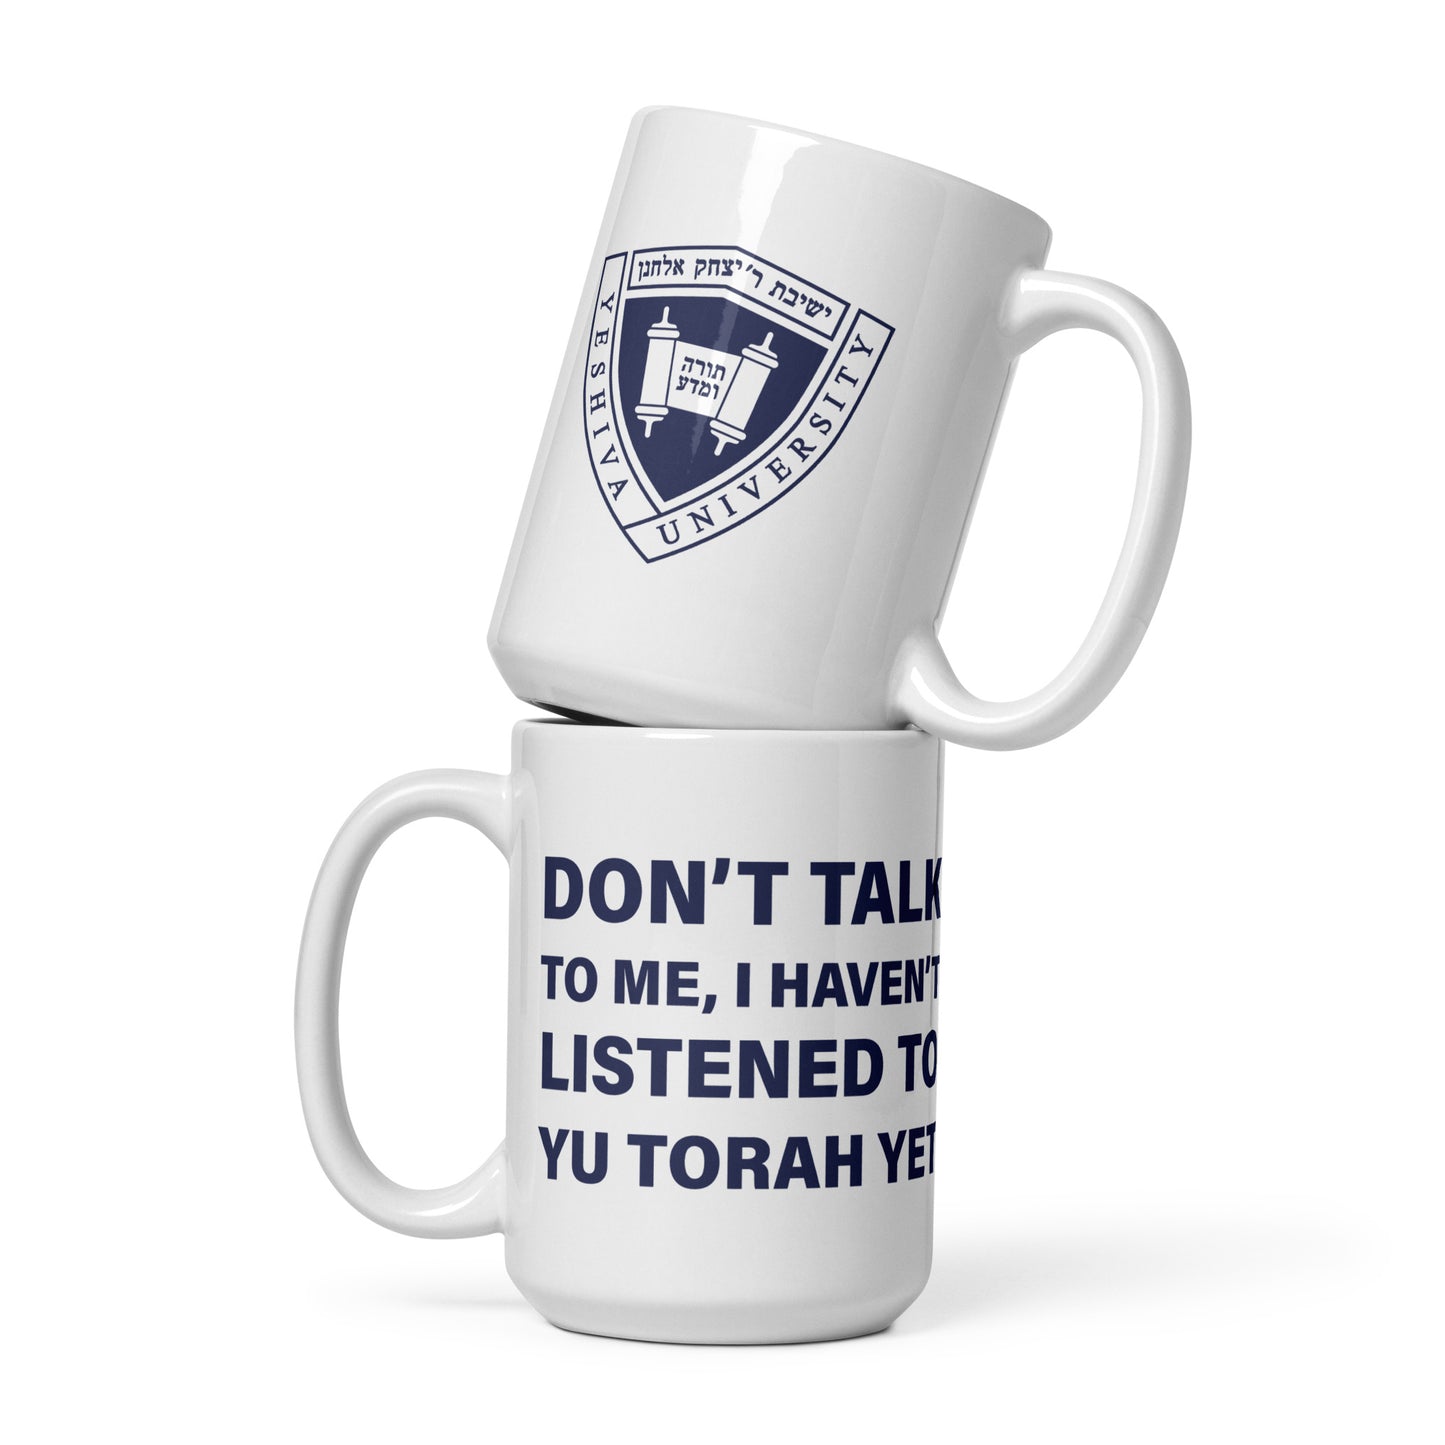 Haven't Listened to YU Torah Yet Mug